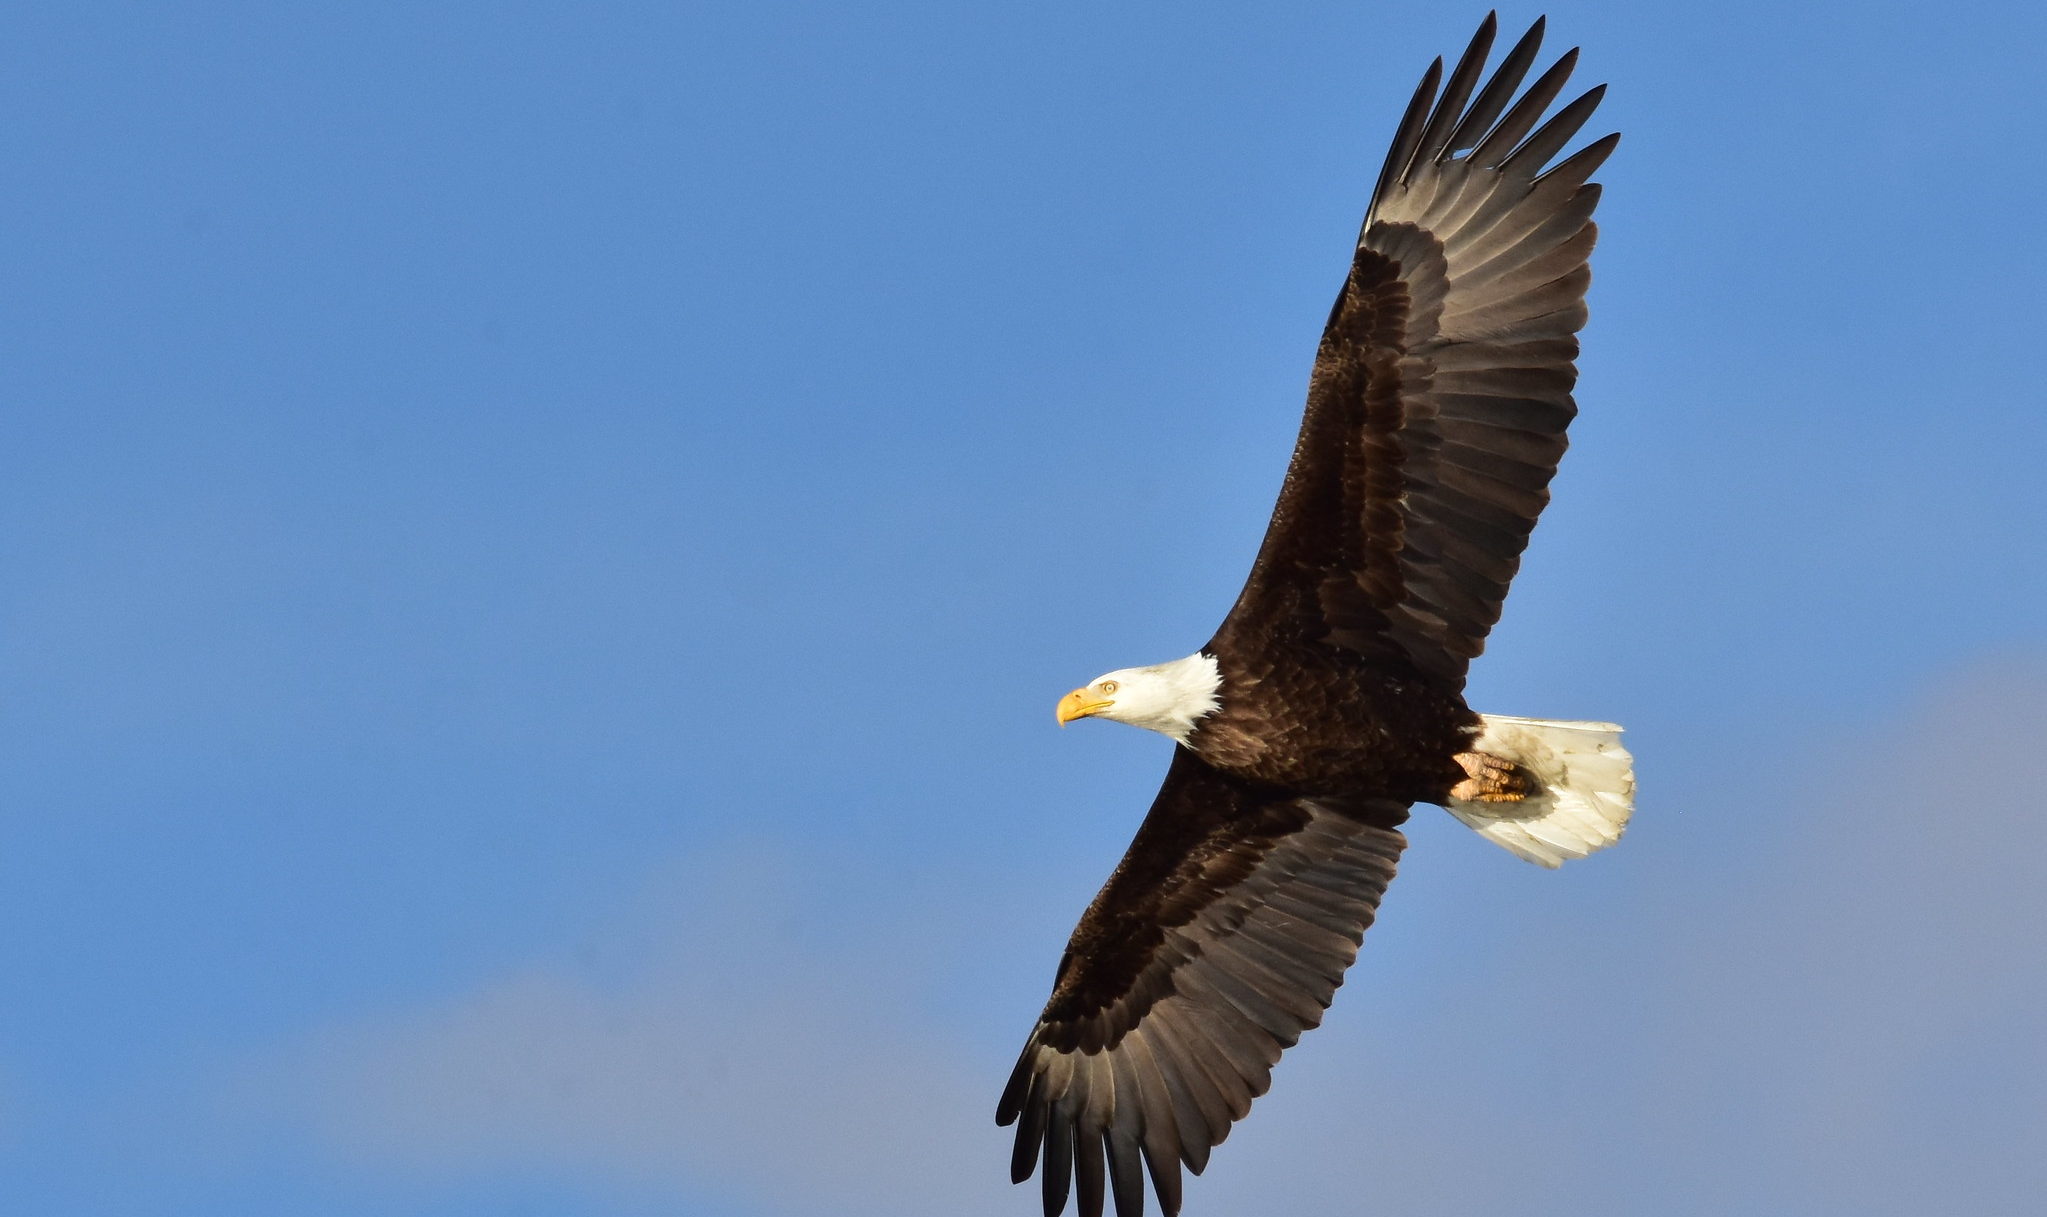 A bald eagle soaring through a clear sky.